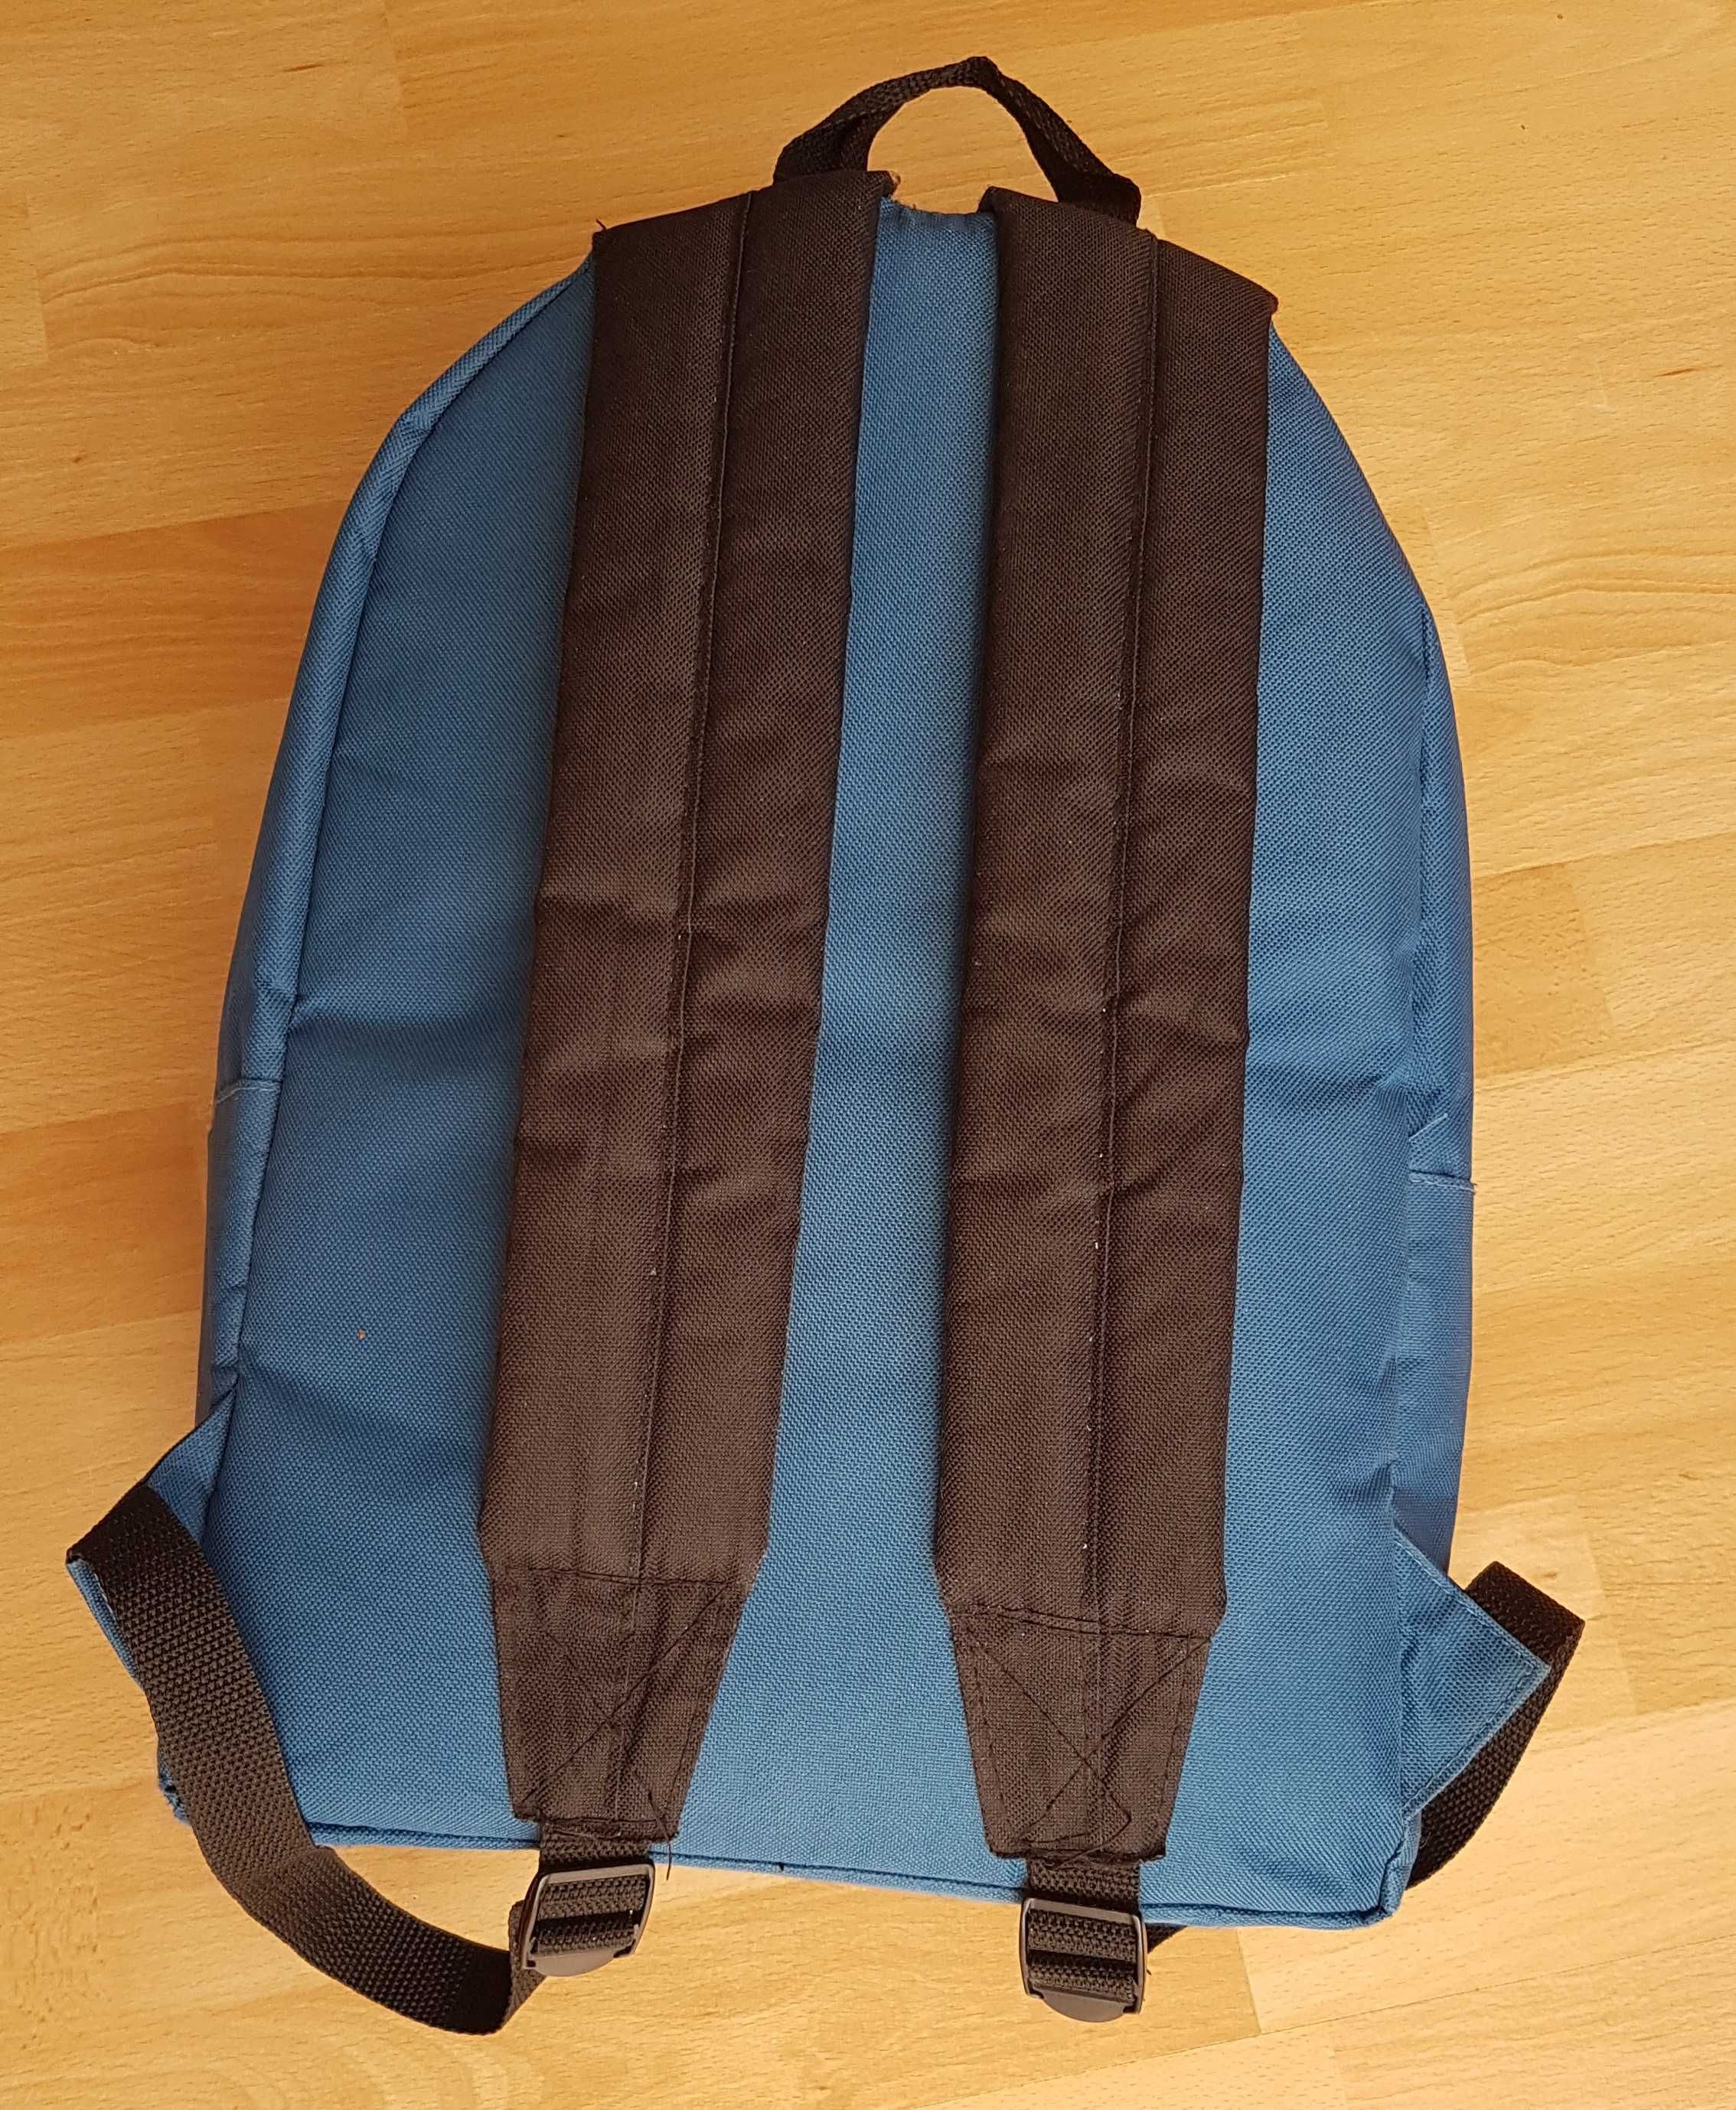 plecak 40x30 cm -kolor niebieski-katon